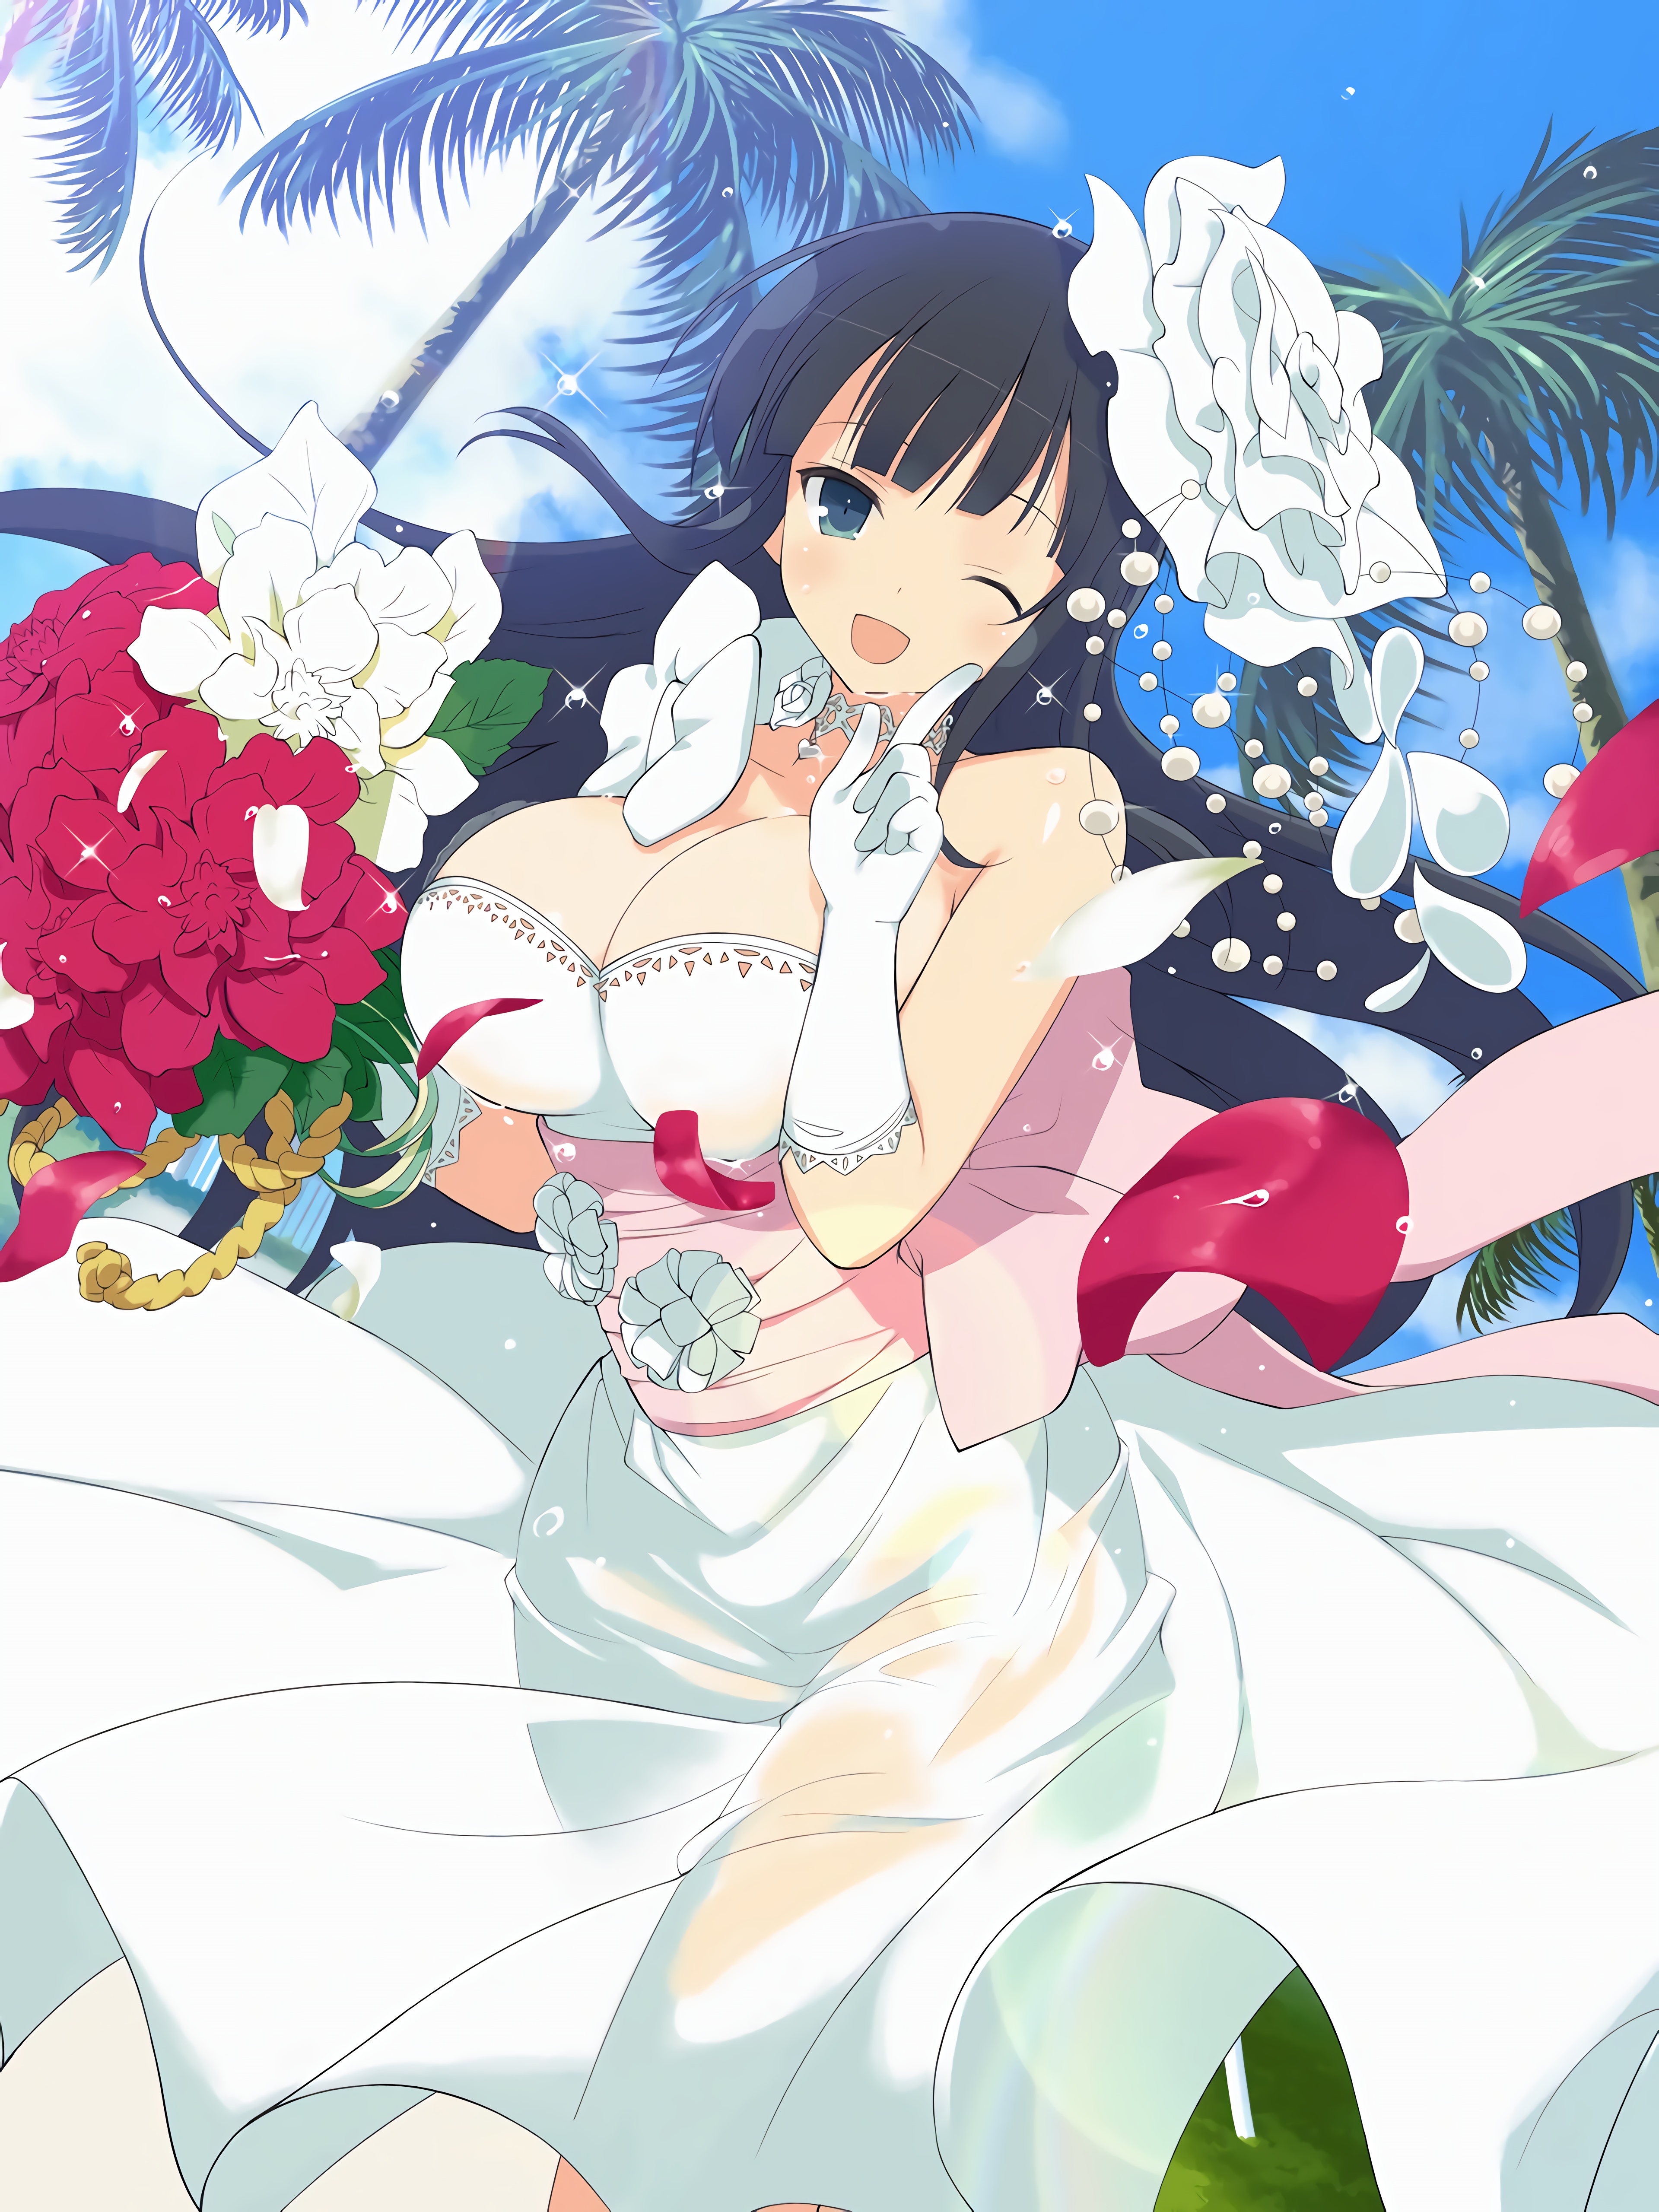 Anime 3840x5120 Senran Kagura women anime anime girls big boobs cleavage wedding dress flowers petals